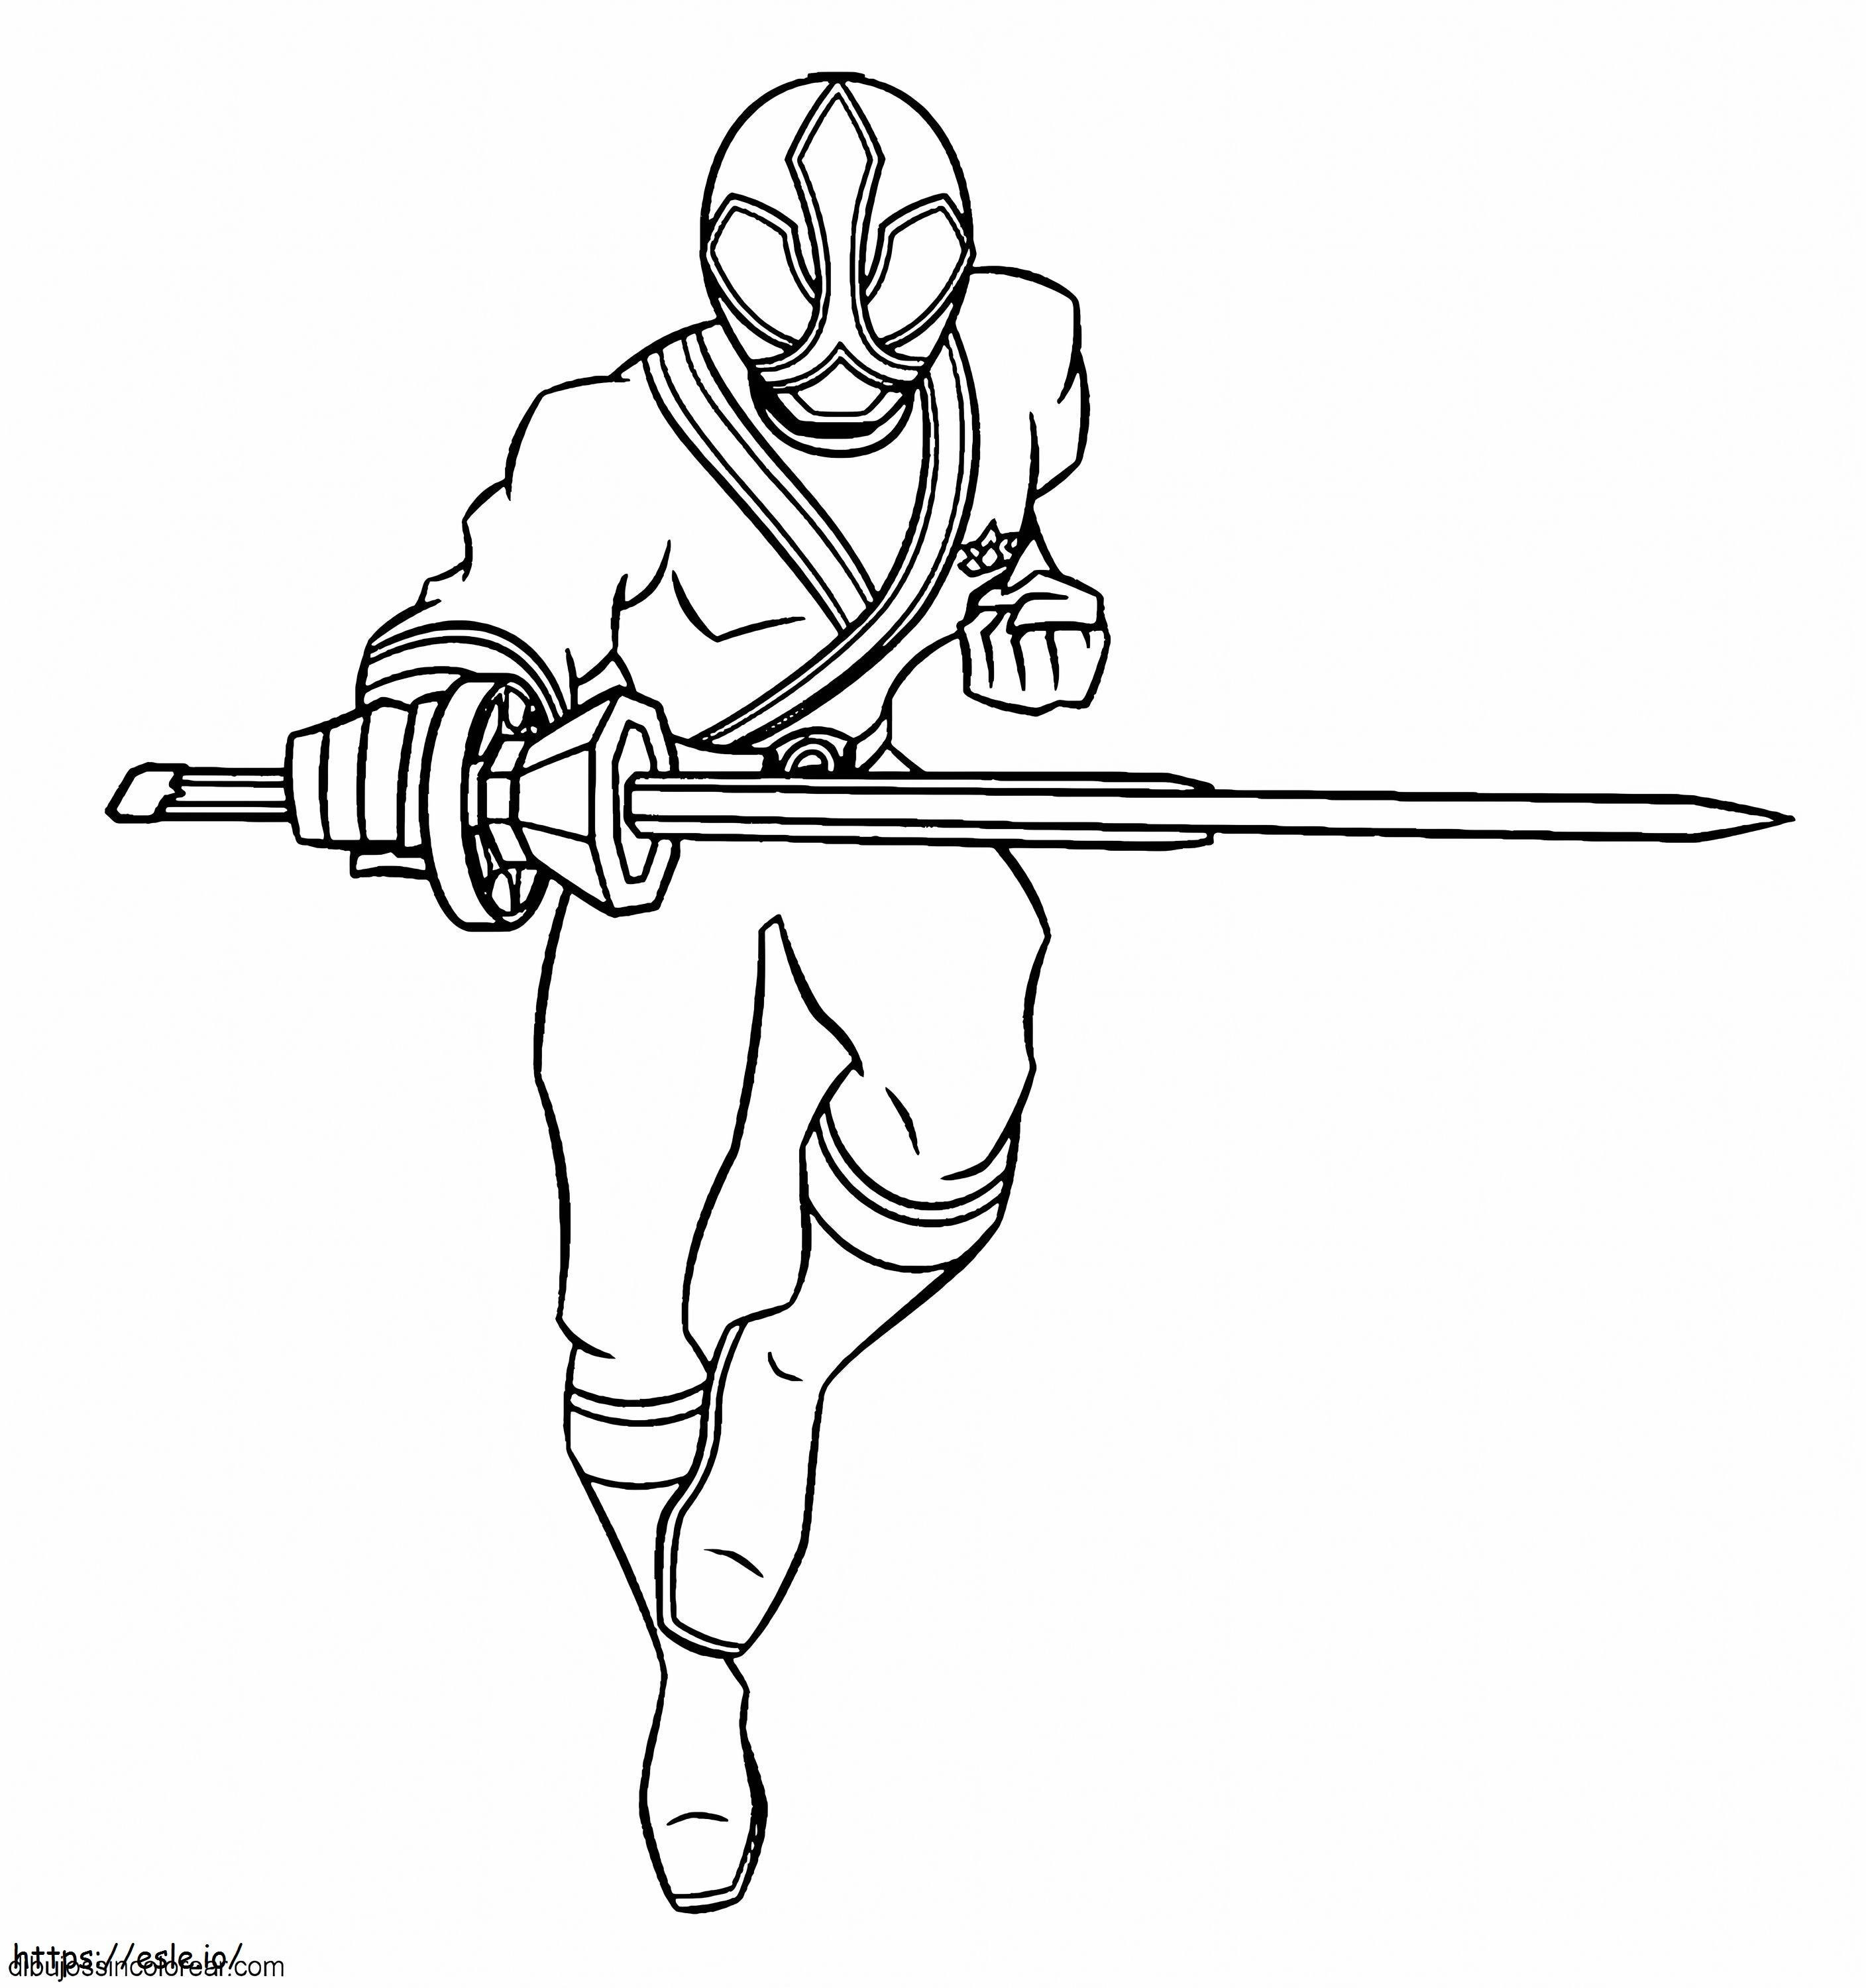  Desenhos De Personagens Power Rangers Samurai Para Colorir 10 para colorir